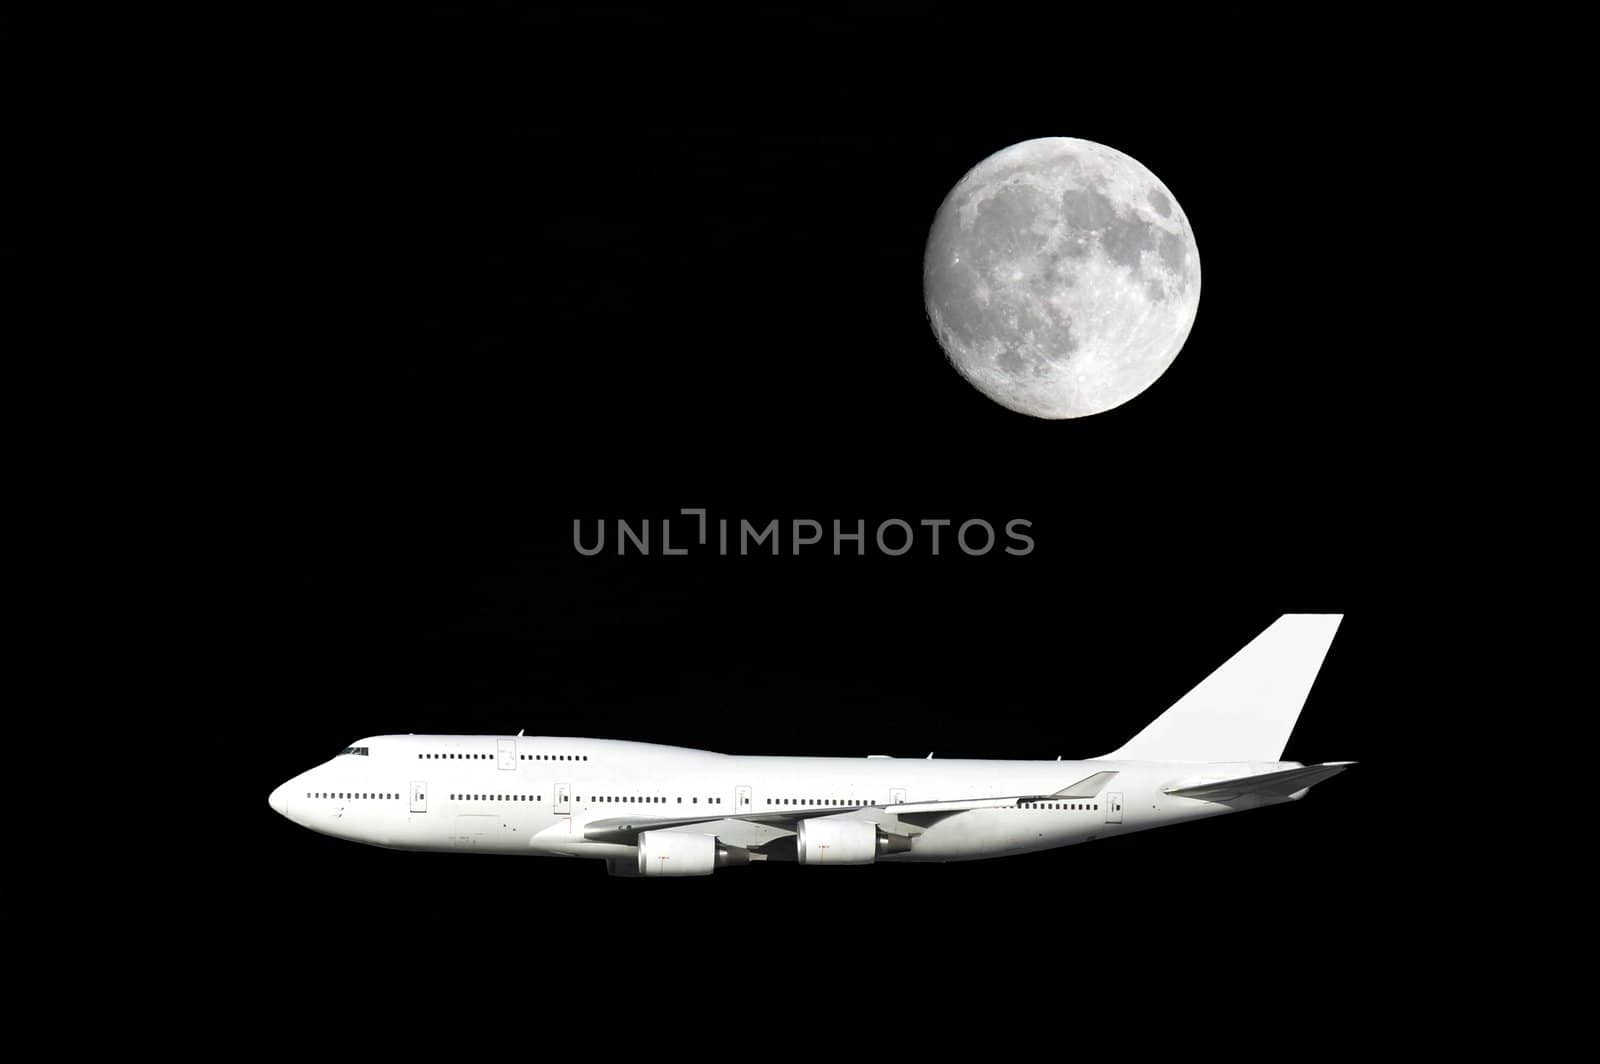 Jumbo jet under full moon by photopierre